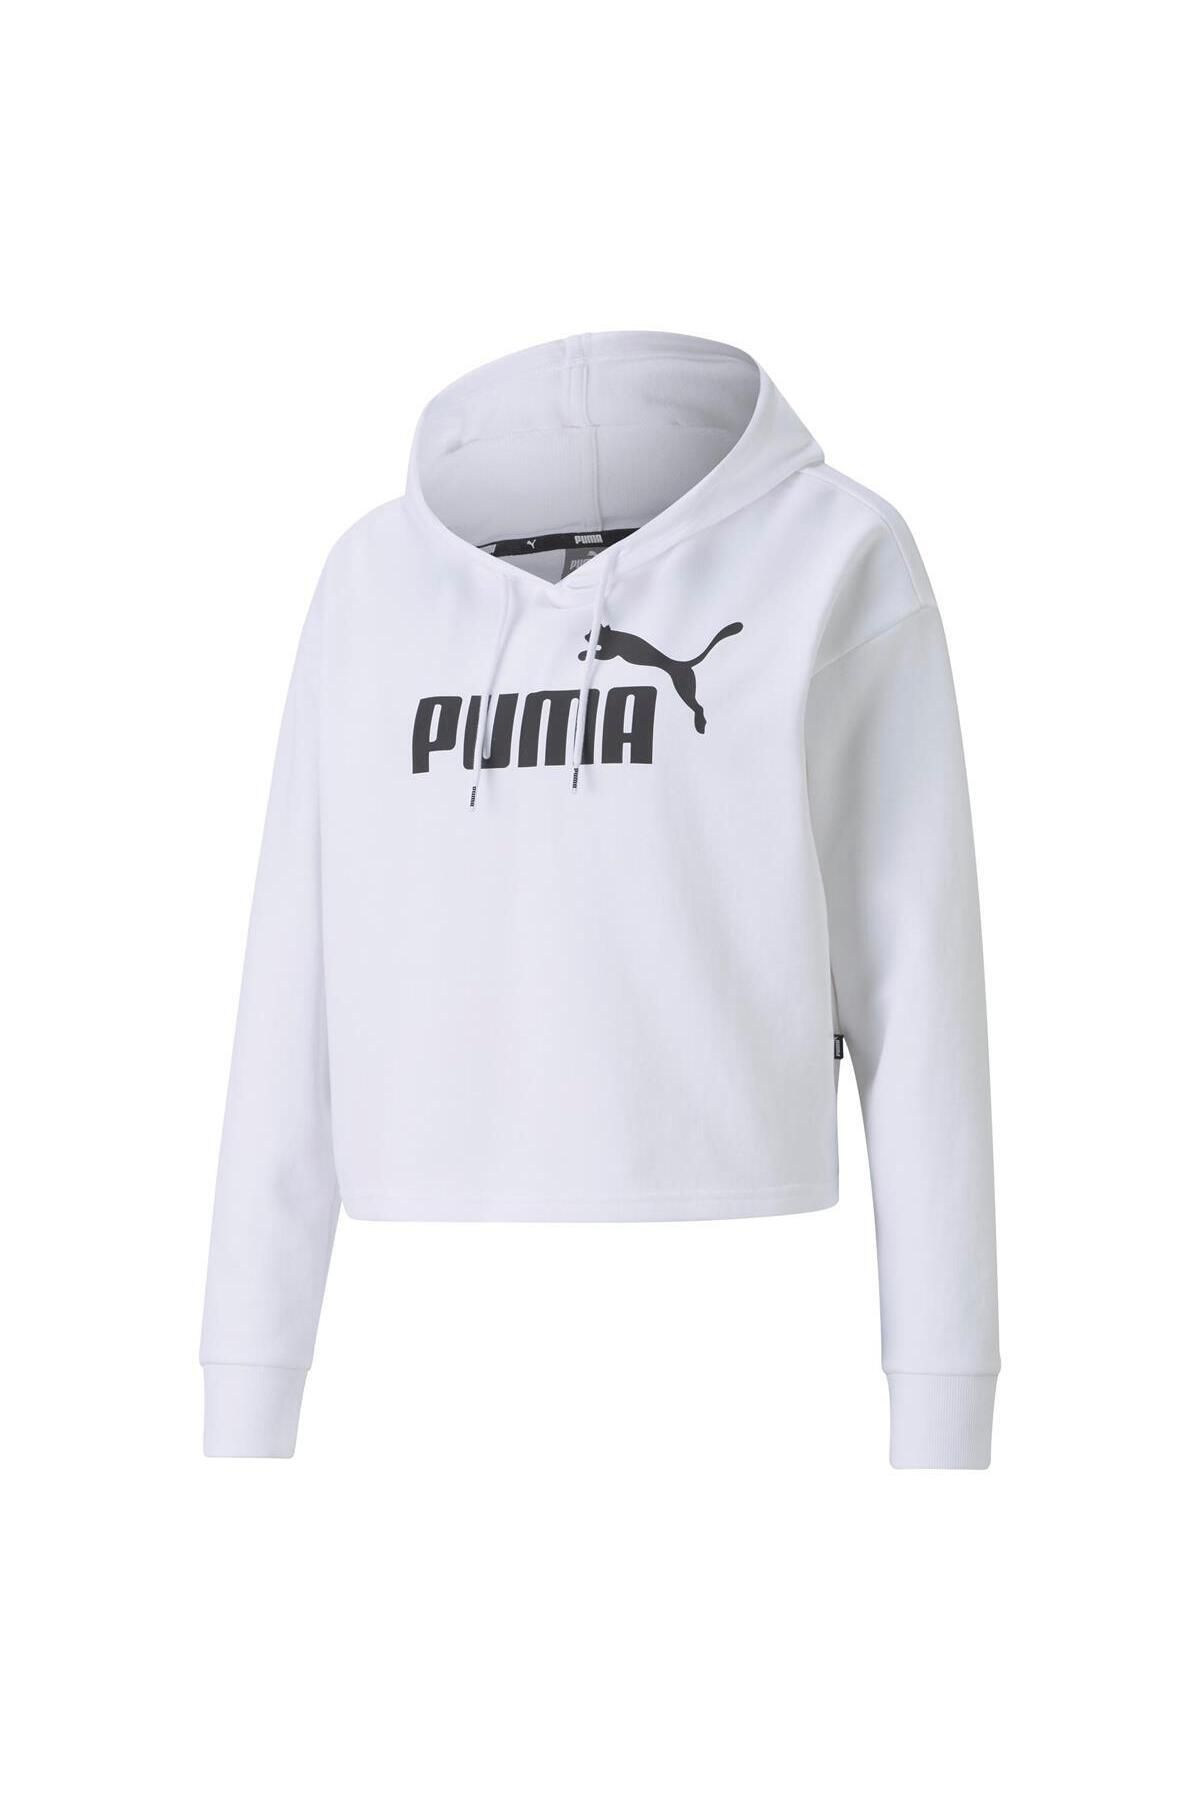 Puma Ess Cropped Logo Hoodie Tr Kadın Sweatshirt